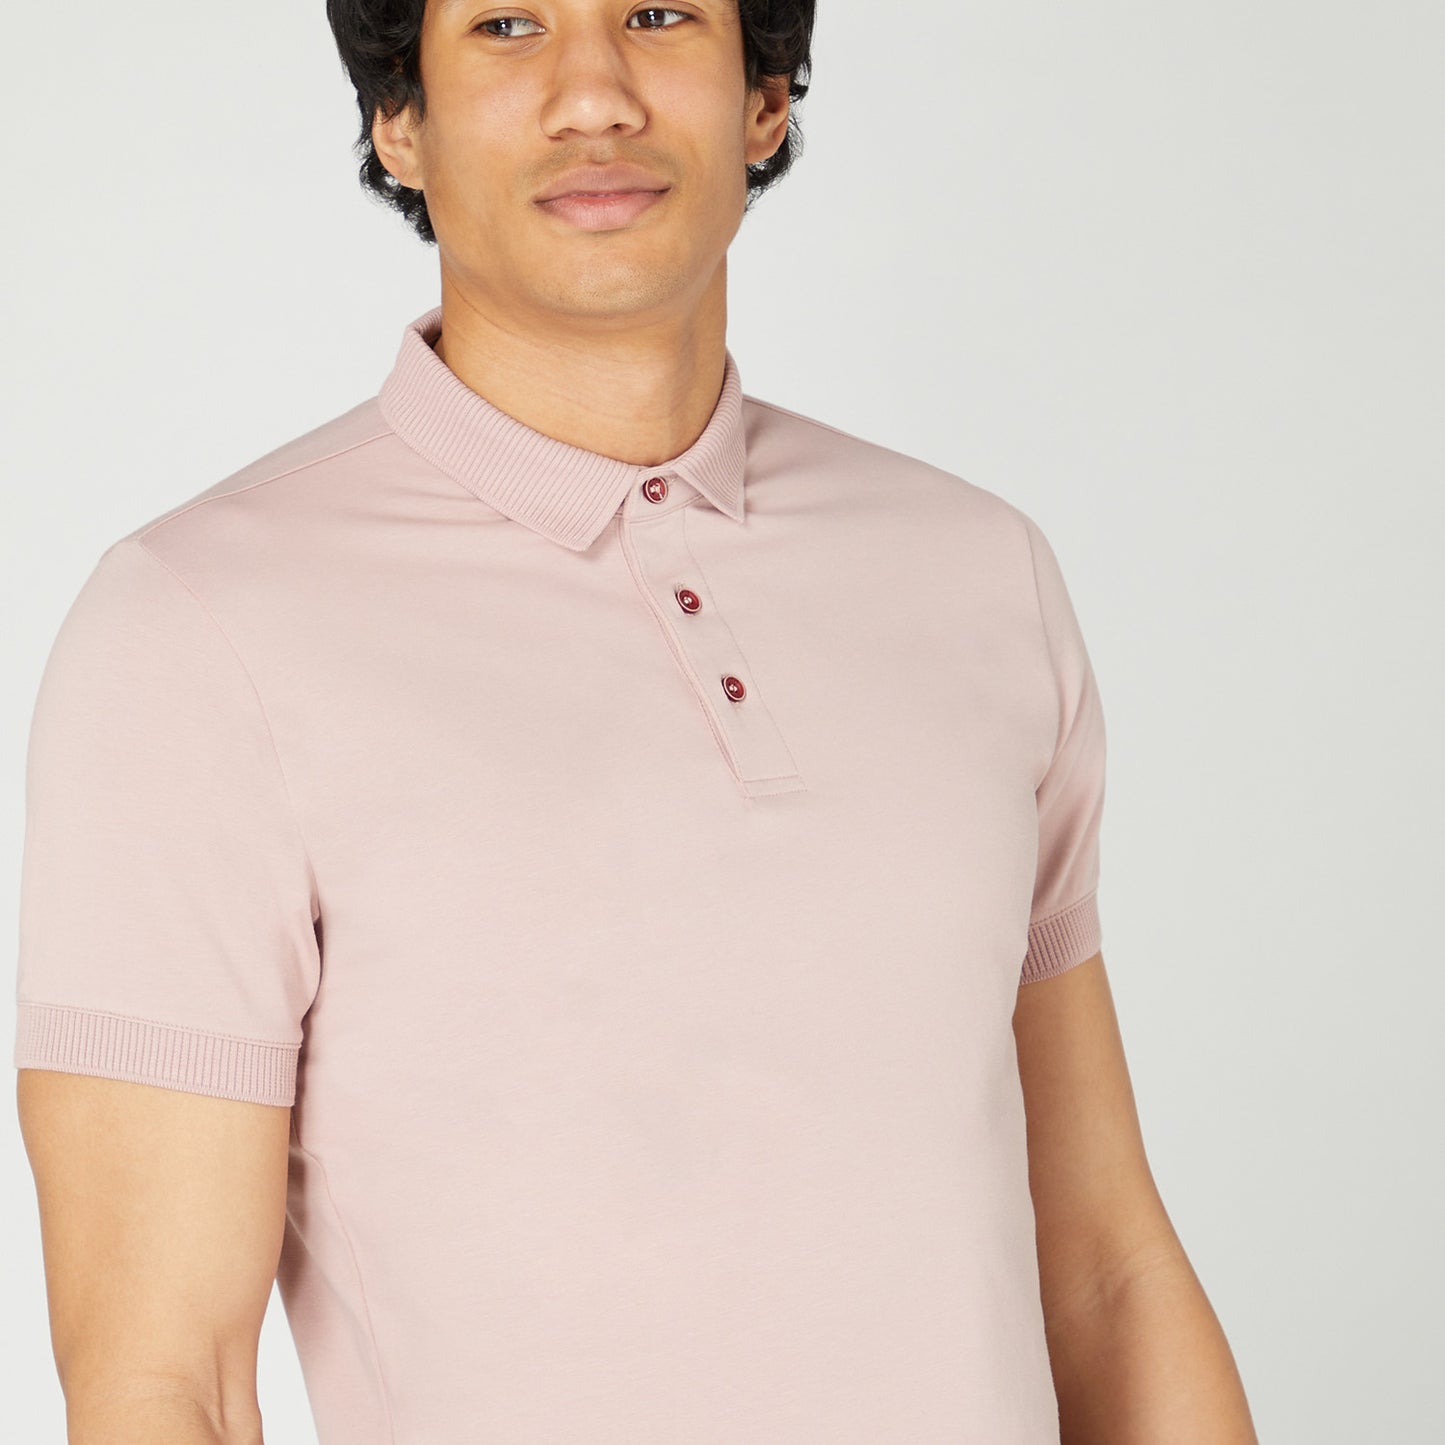 Remus Uomo 58724 61 Mauve Pink Short Sleeve Polo Shirt